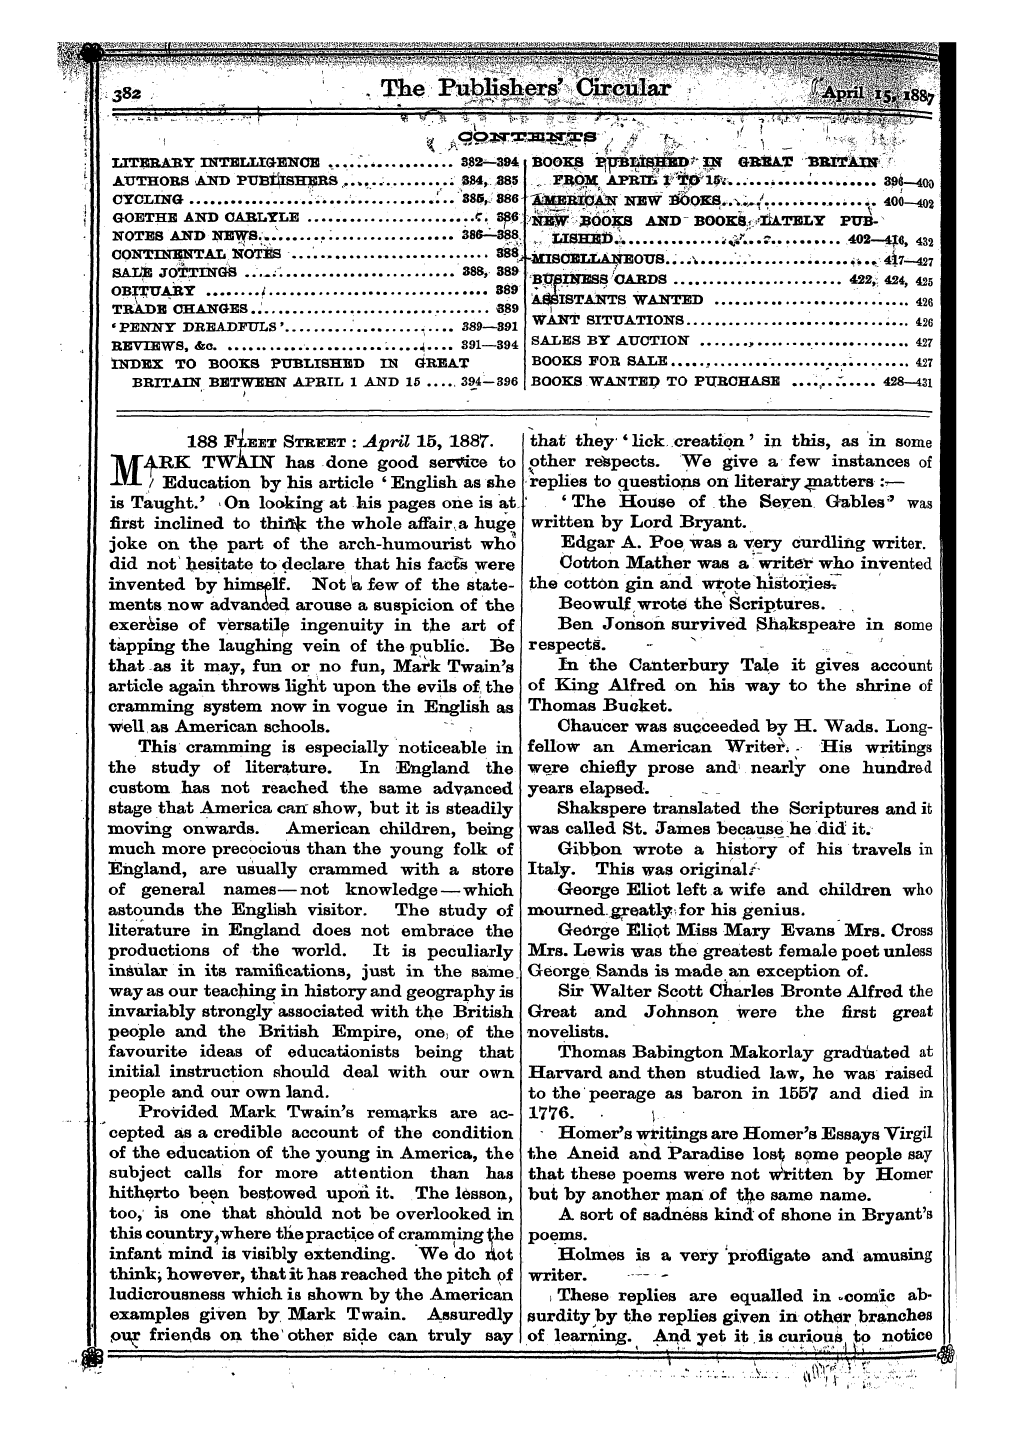 Publishers’ Circular (1880-1890): jS F Y, 1st edition: 4